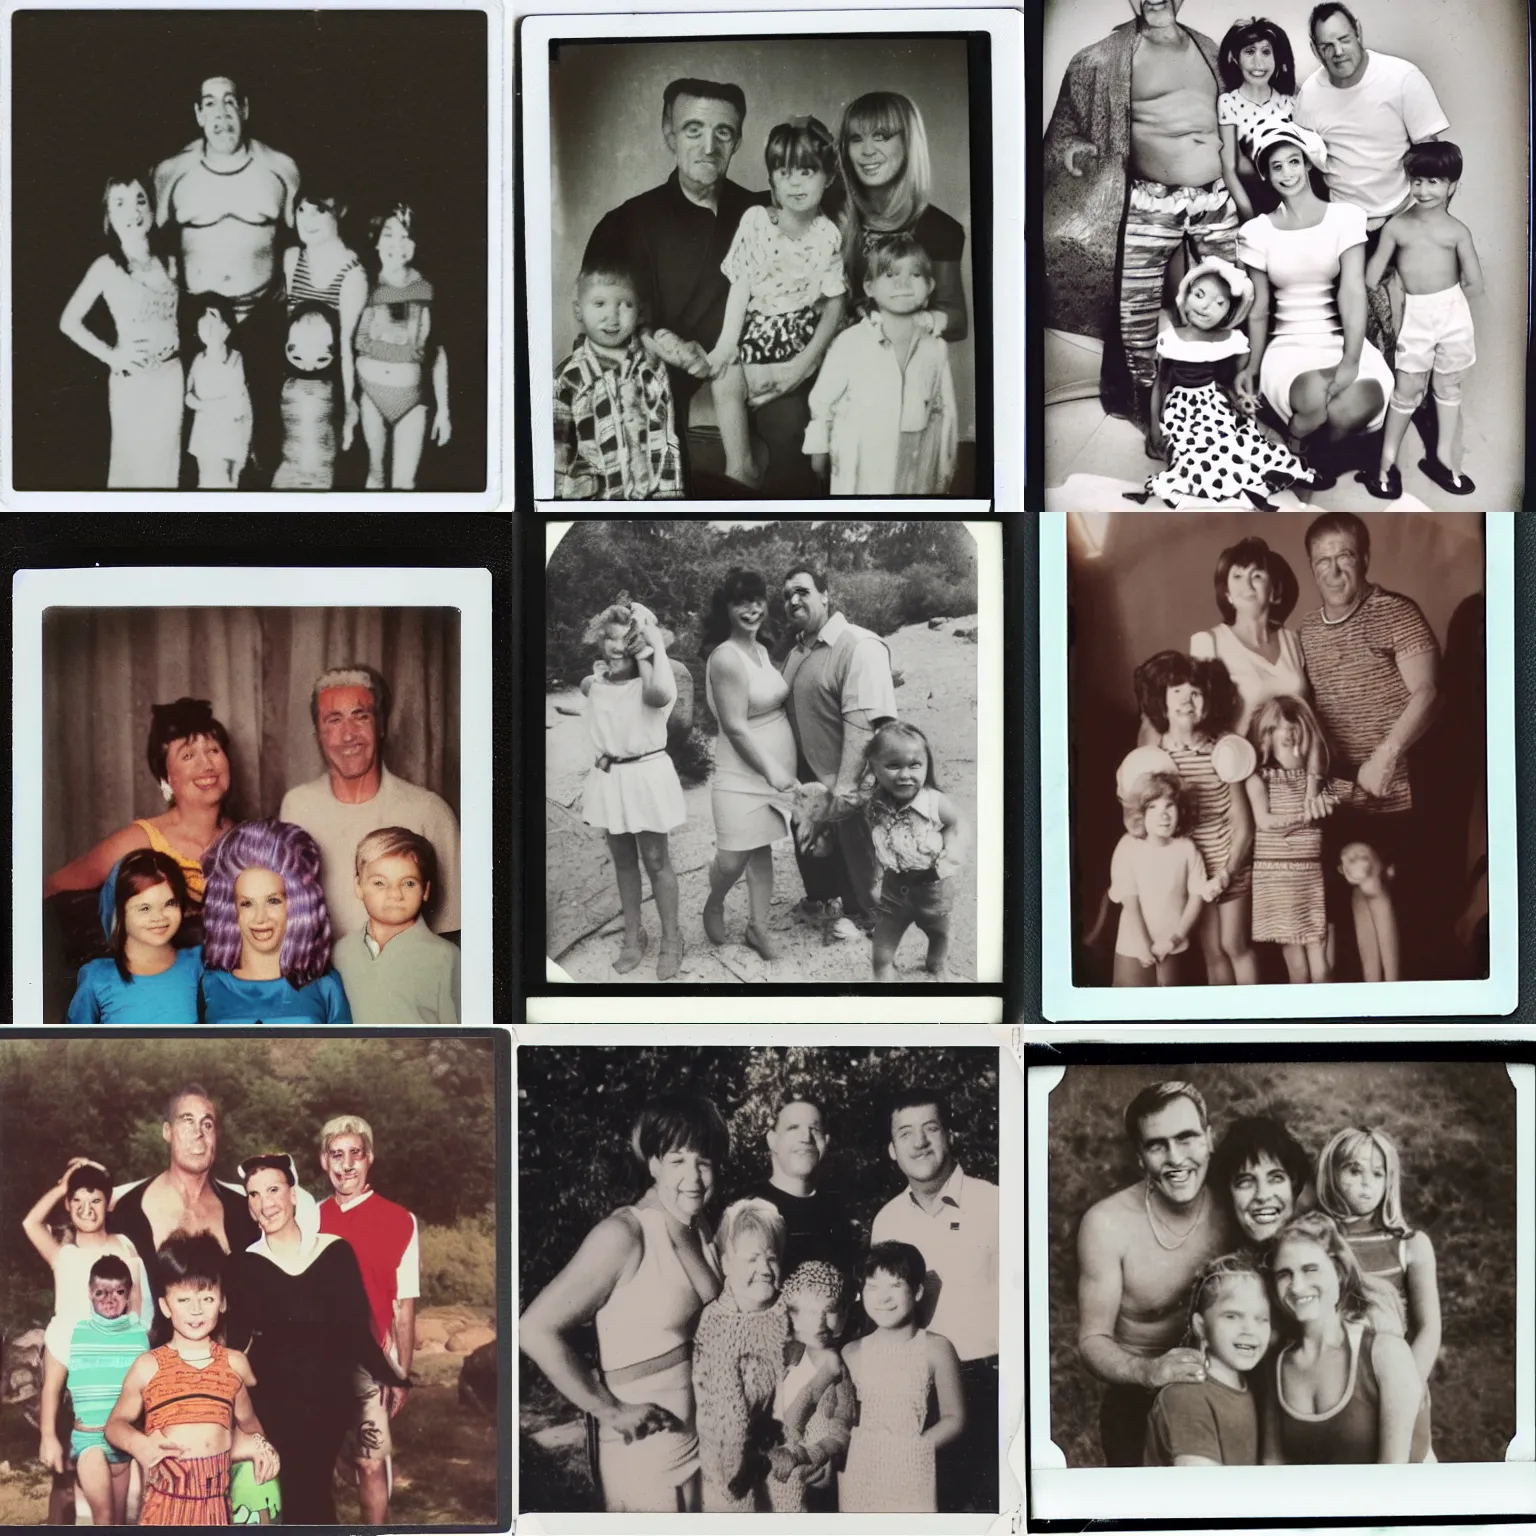 Prompt: a Polaroid photo of the Flintstones family